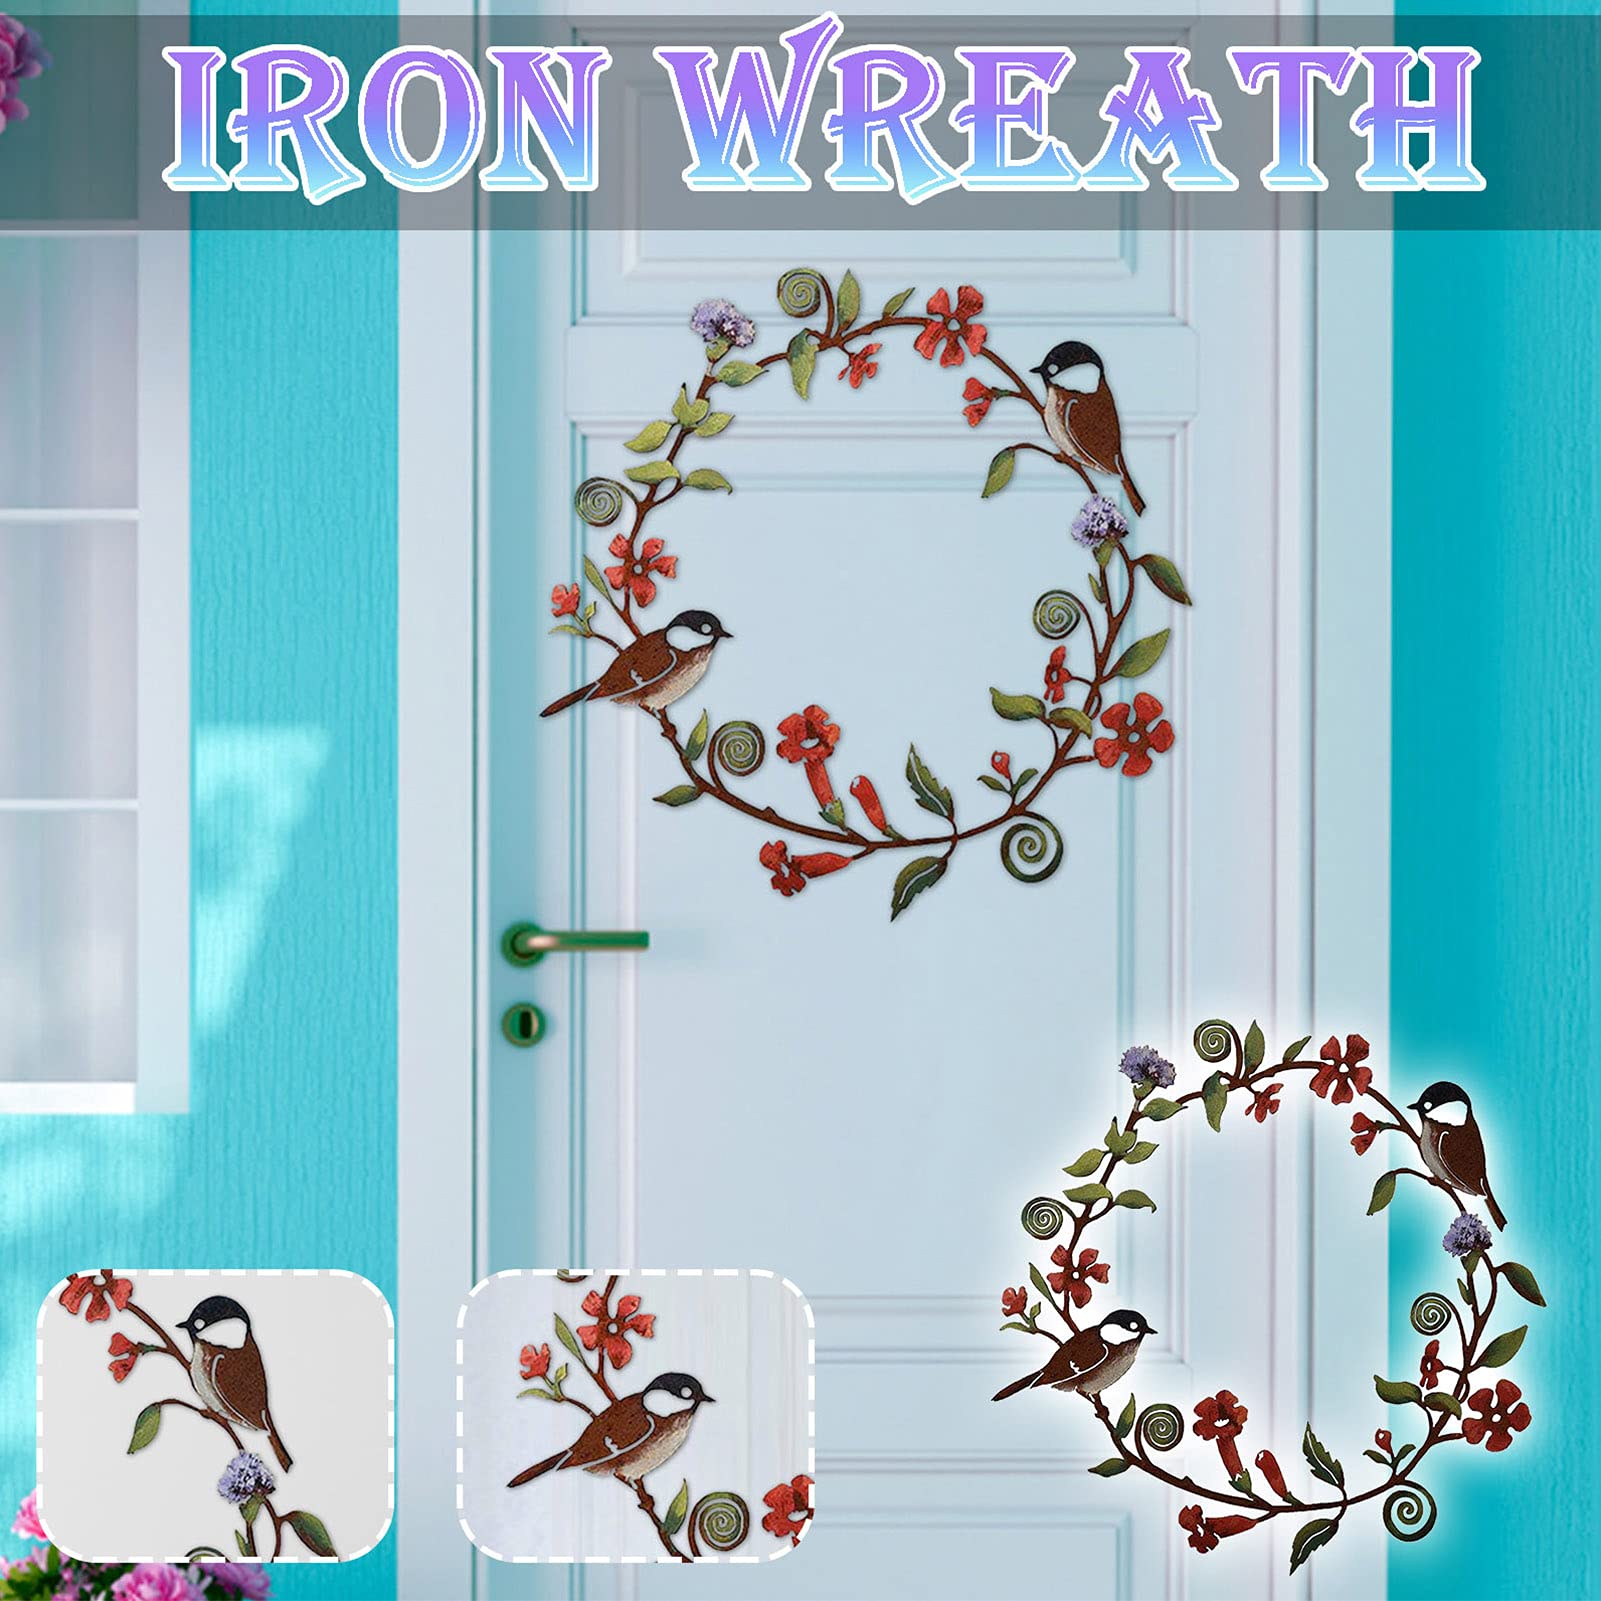 Handmade Stainless Steel Chickadees Flowers Wreath For Indoor Outdoor Decoration